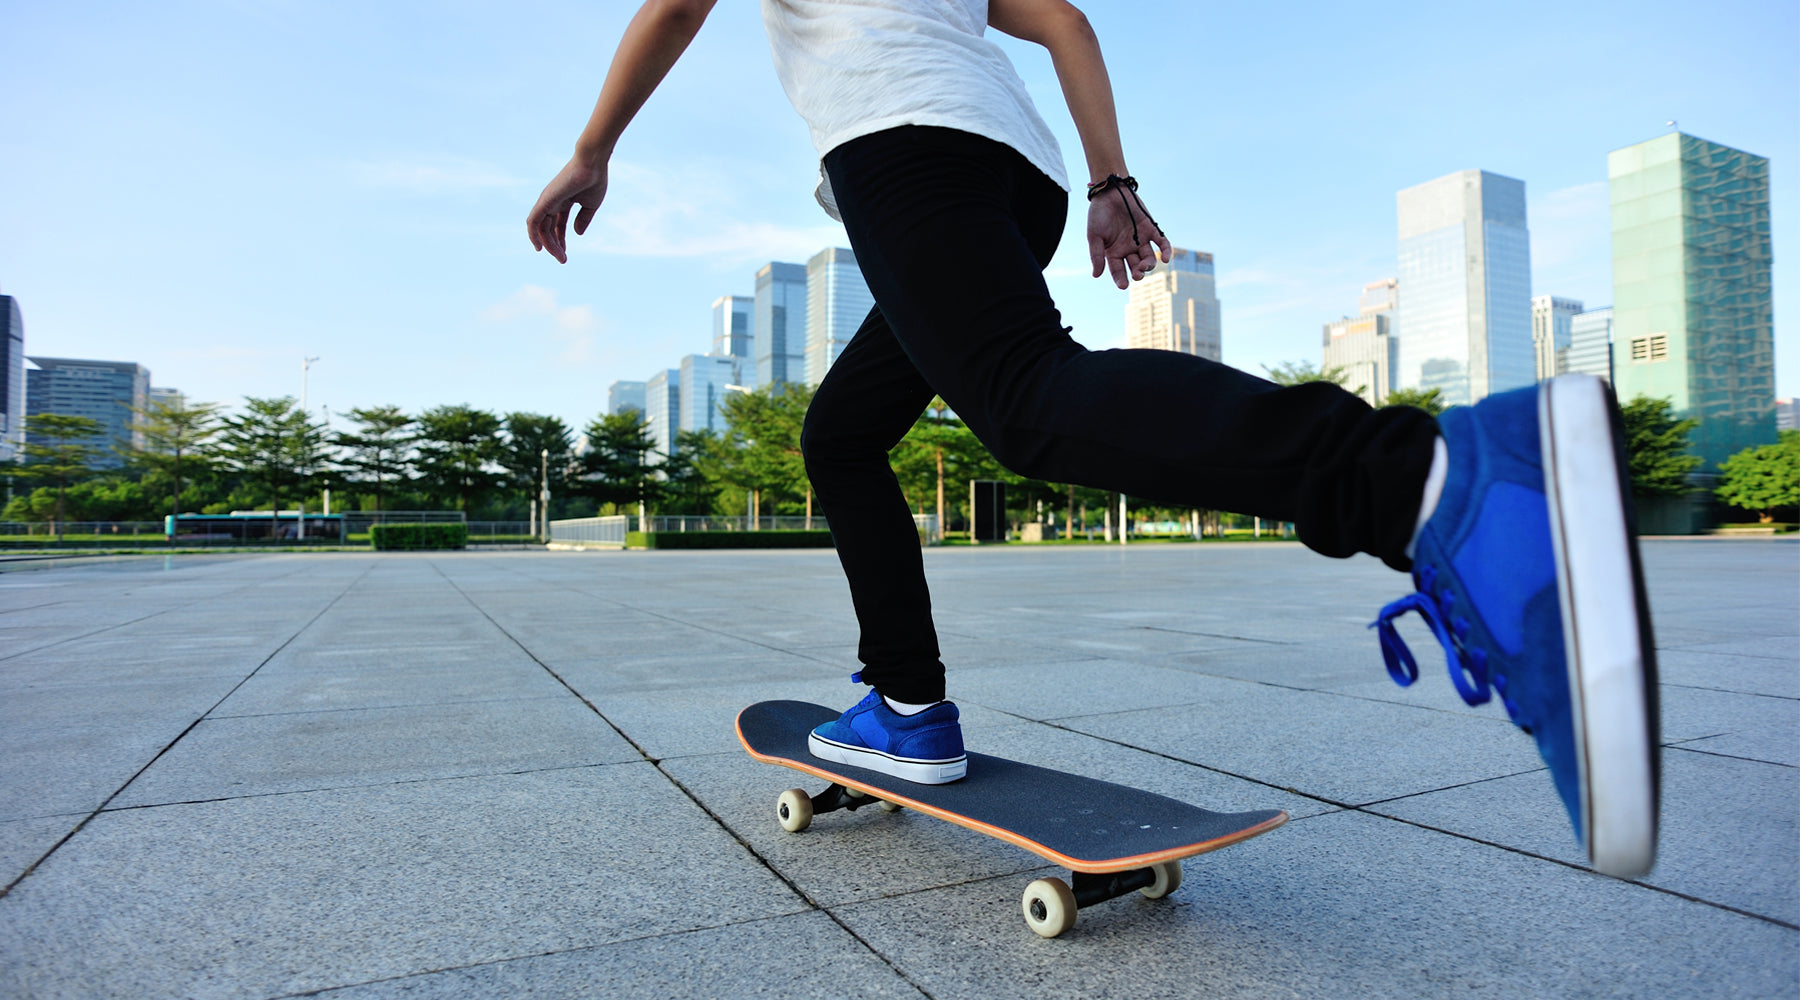 goofy-stance-of-skateboard